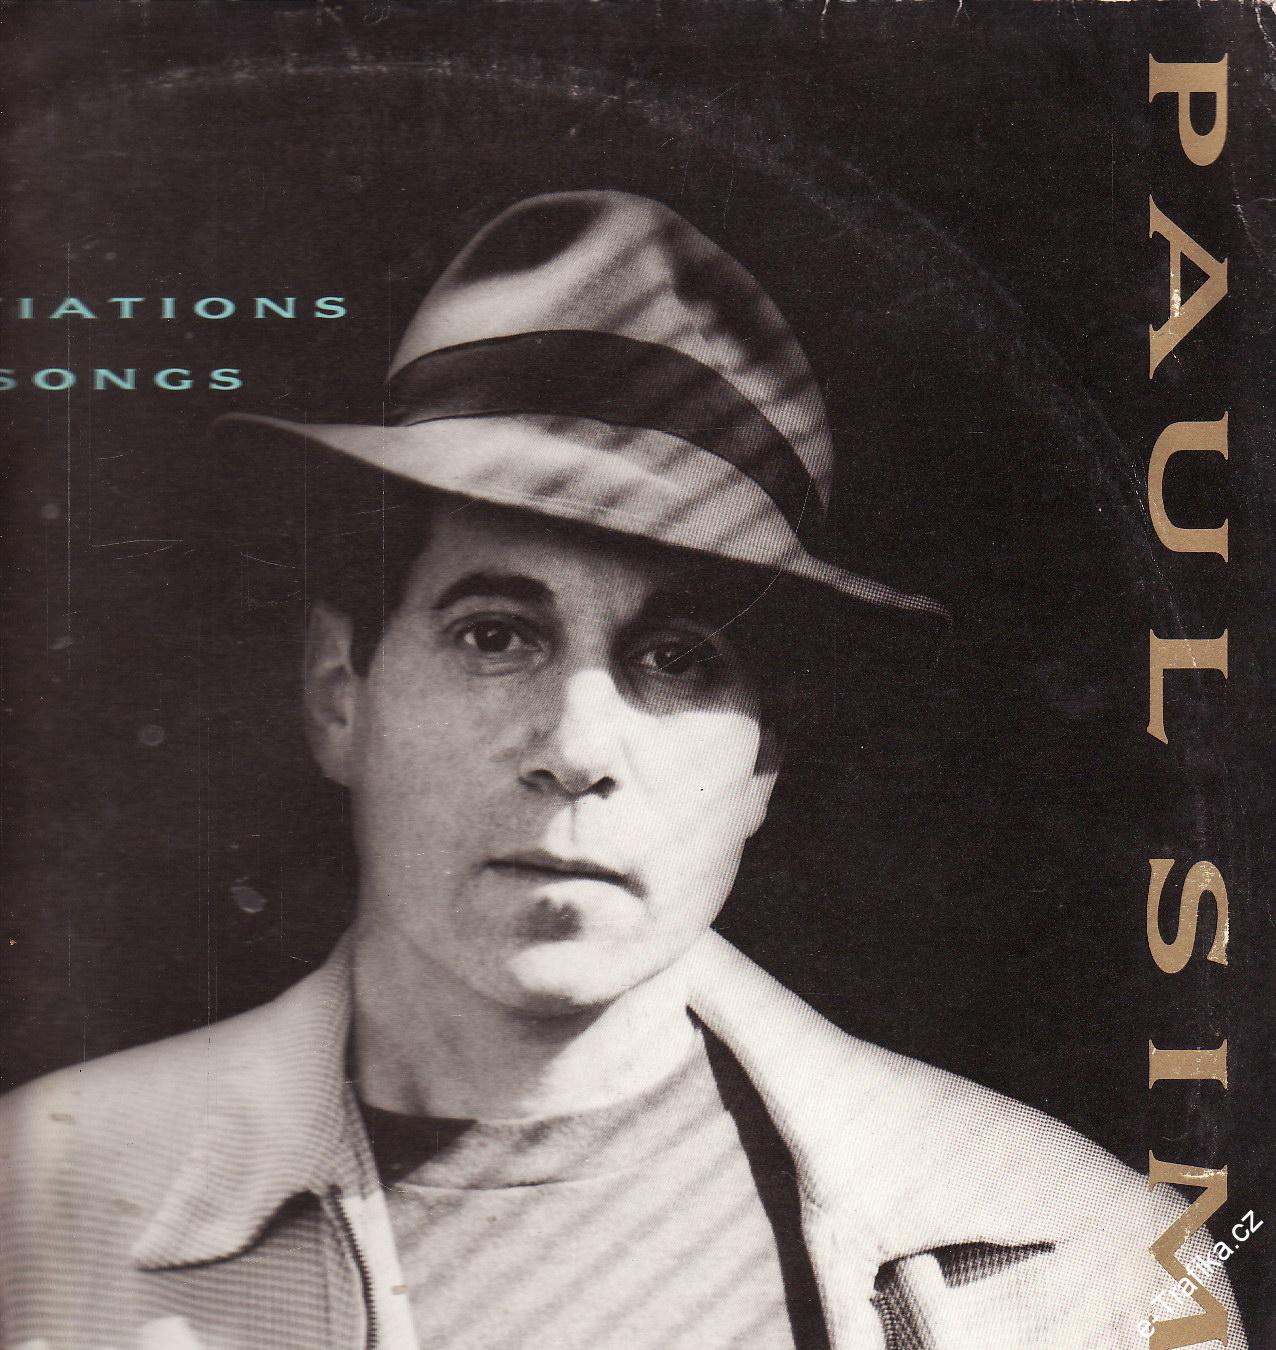 LP 2album, Paul Simon, Negotiations and Love Songs 1971 - 1986